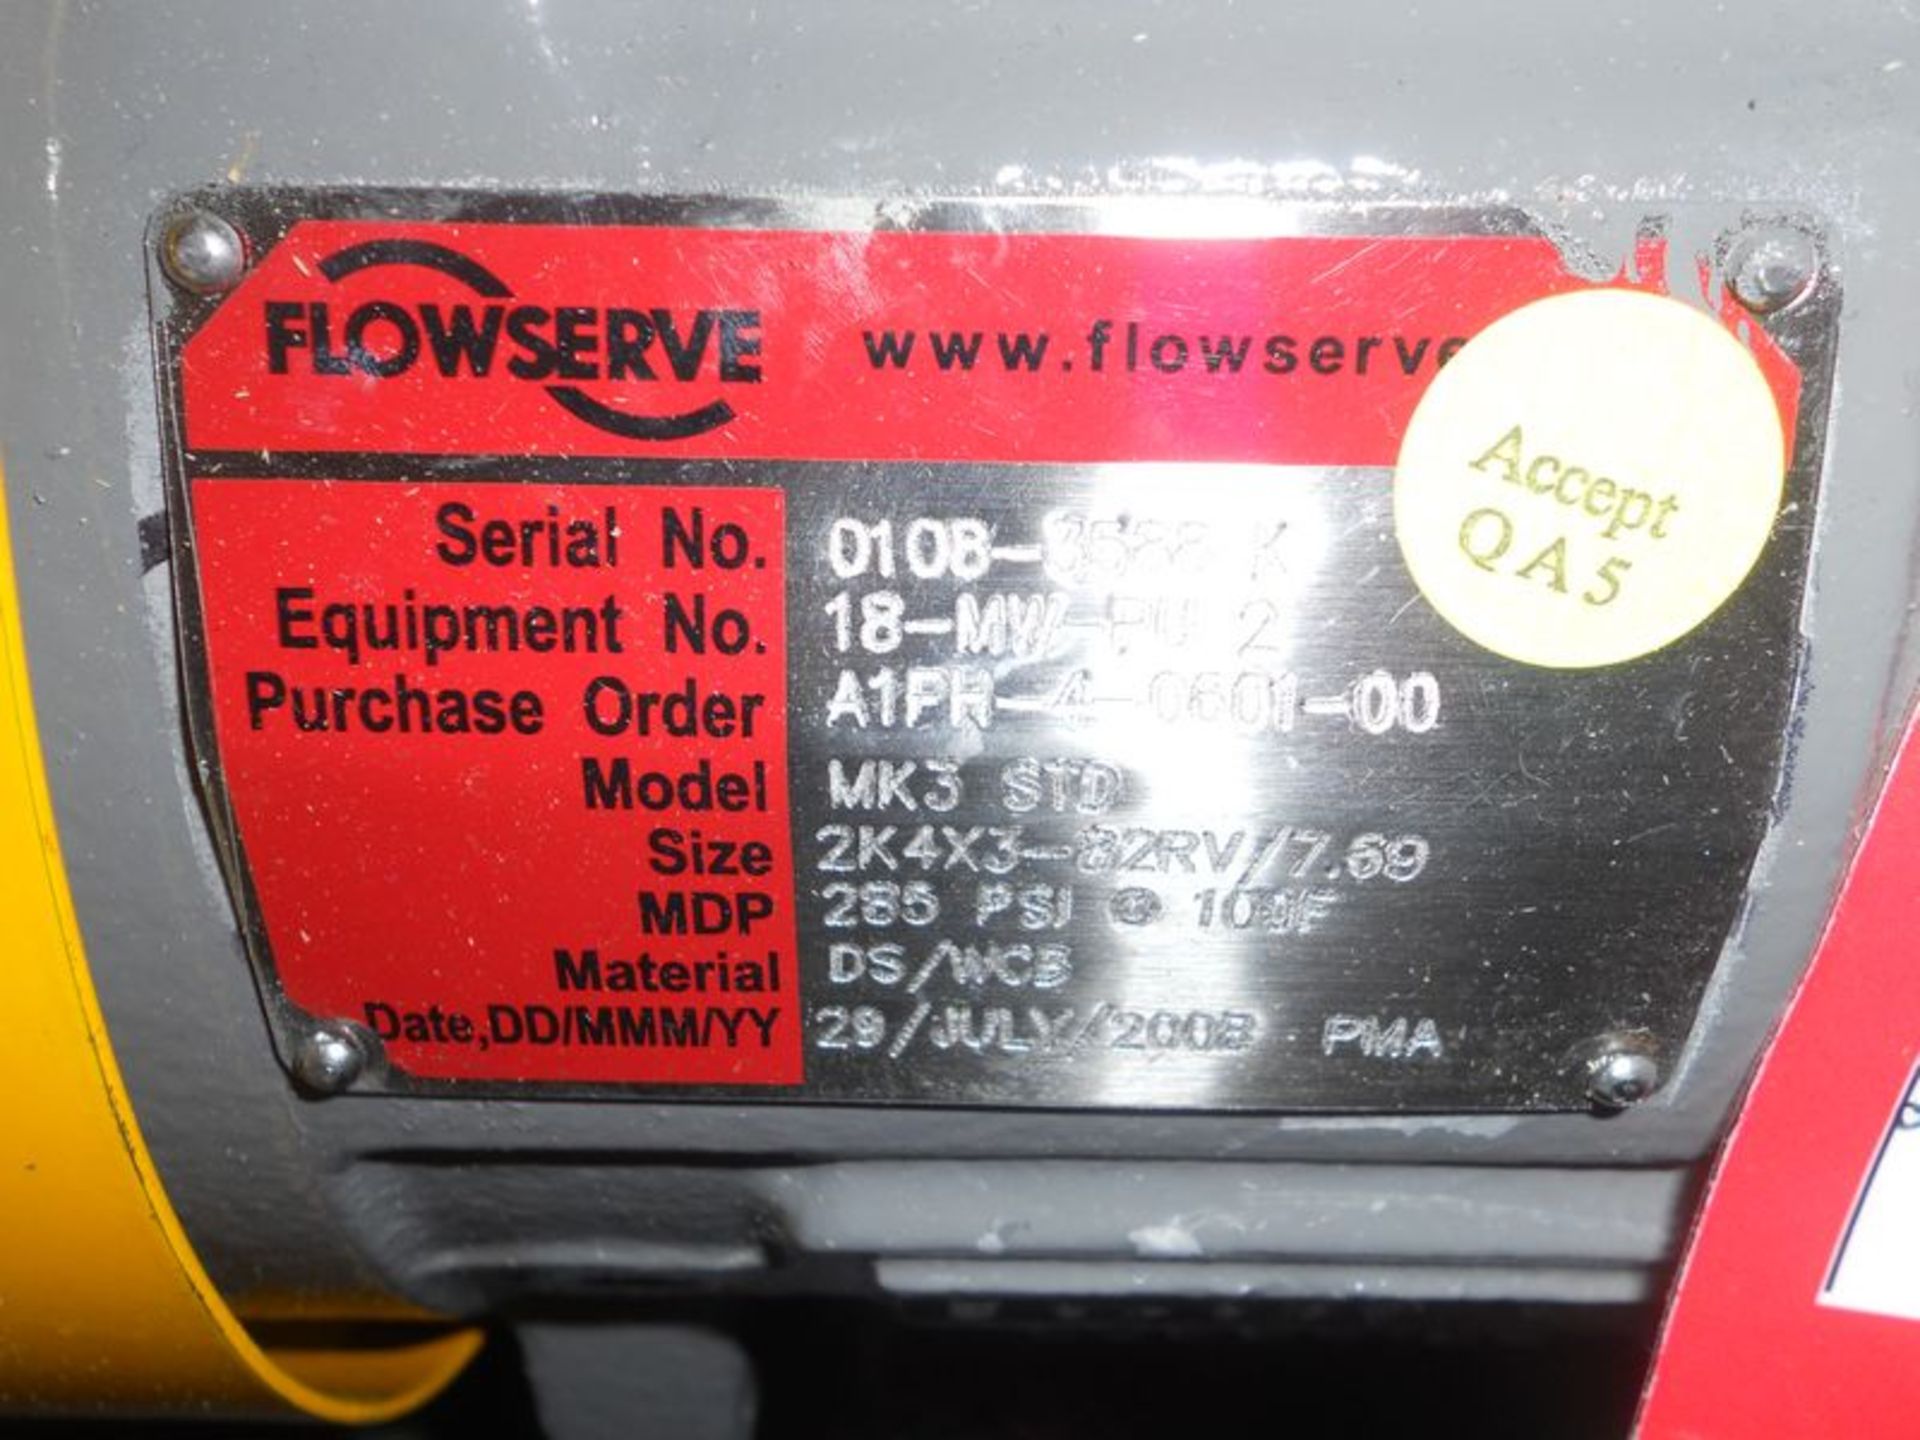 FlowServe MK3 STD centrifugal pump, S/N 0108-3590-H, 4" X 3", 60 HP, MDP 285 psi @ 100 DegF, Size - Image 5 of 6